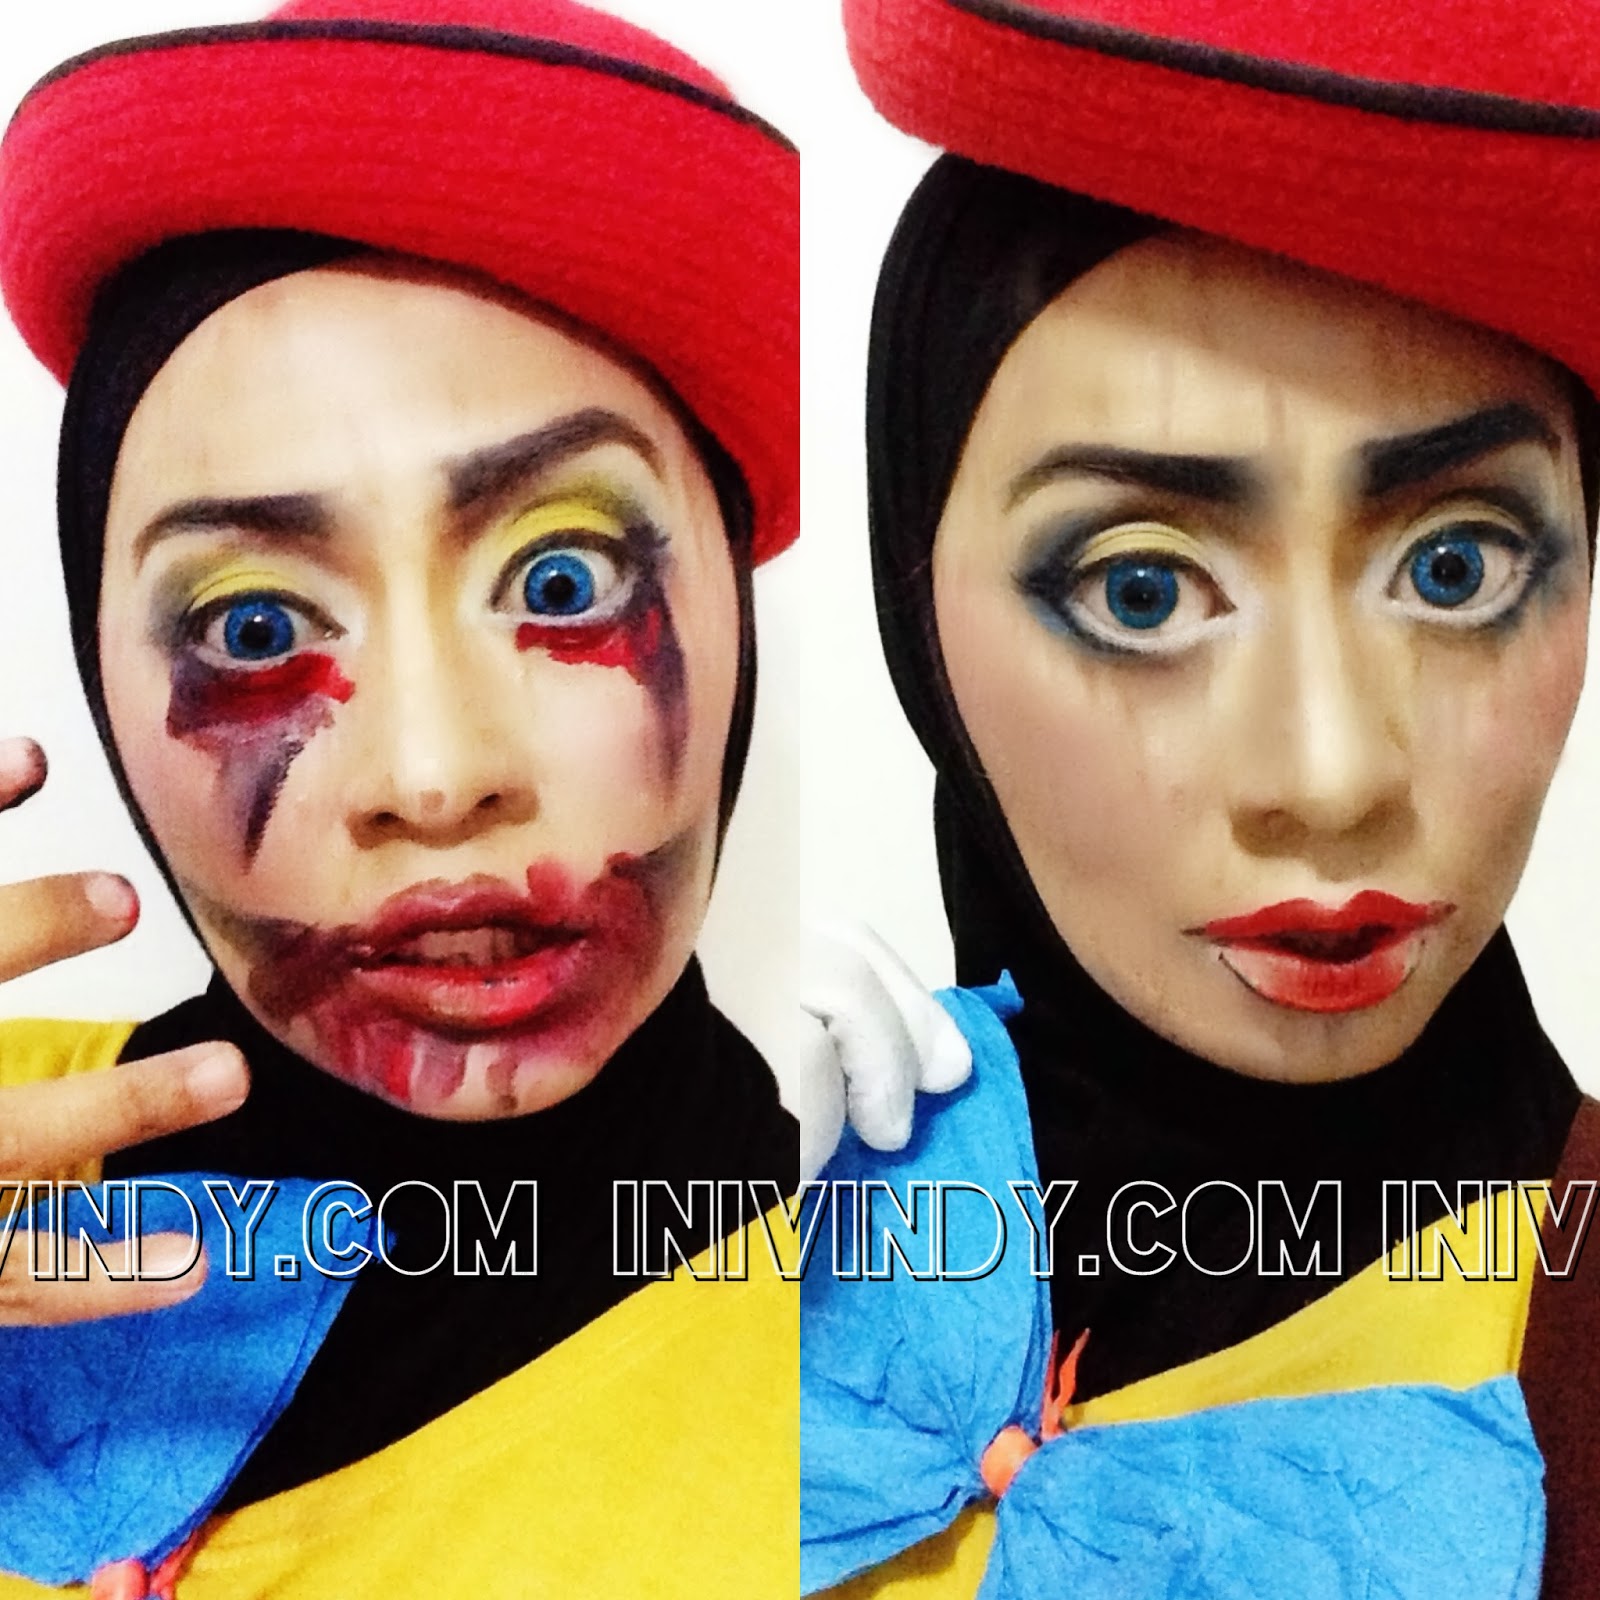 Ini Vindy Yang Ajaib SFX Halloween Pinocchio Makeup Inspired